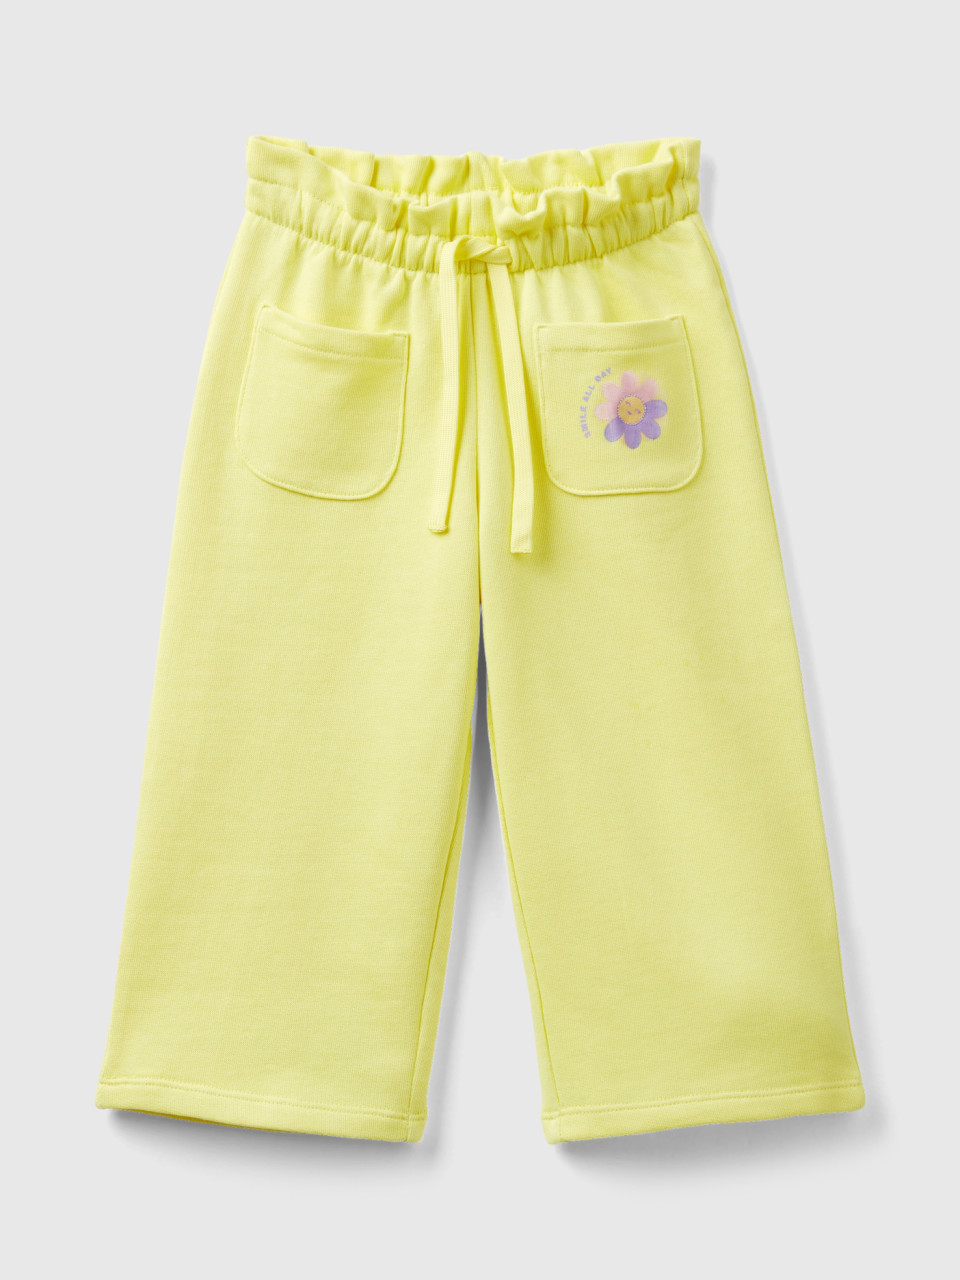 Benetton, Cropped Fit Sweatpants, Yellow, Kids